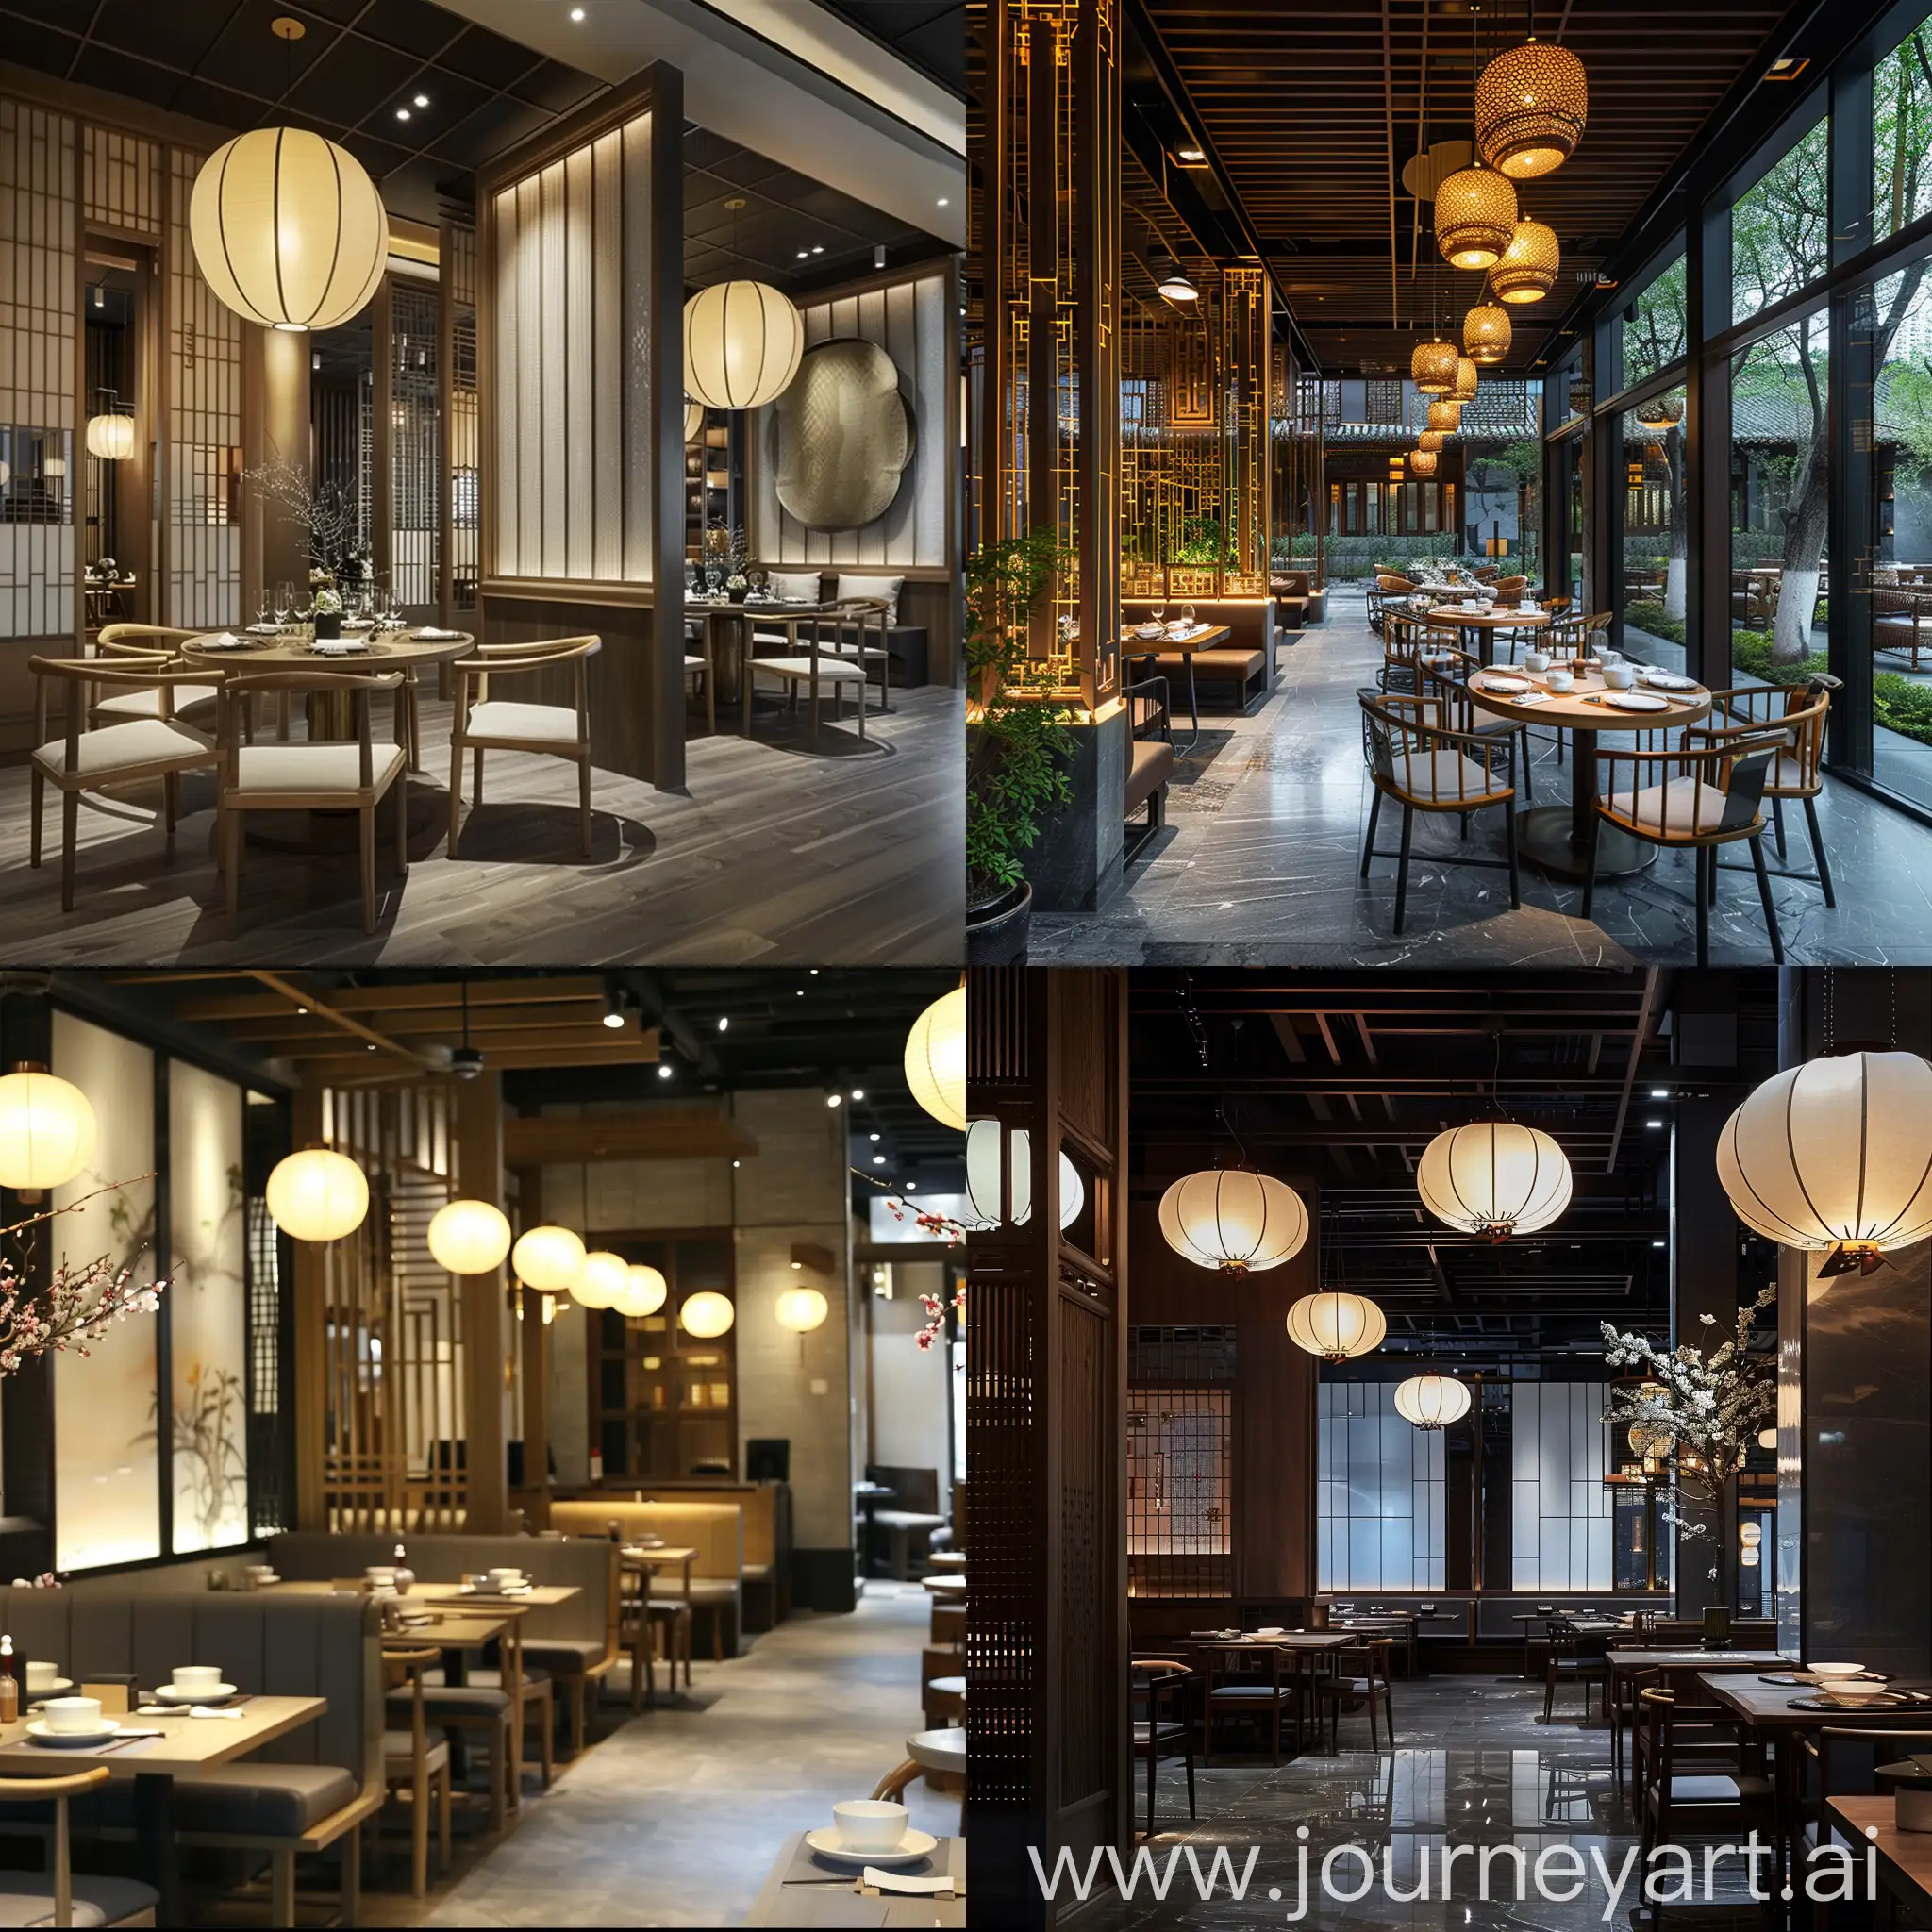 Modern-Shandong-Cuisine-Restaurant-Interior-Design-with-Ambient-Lighting